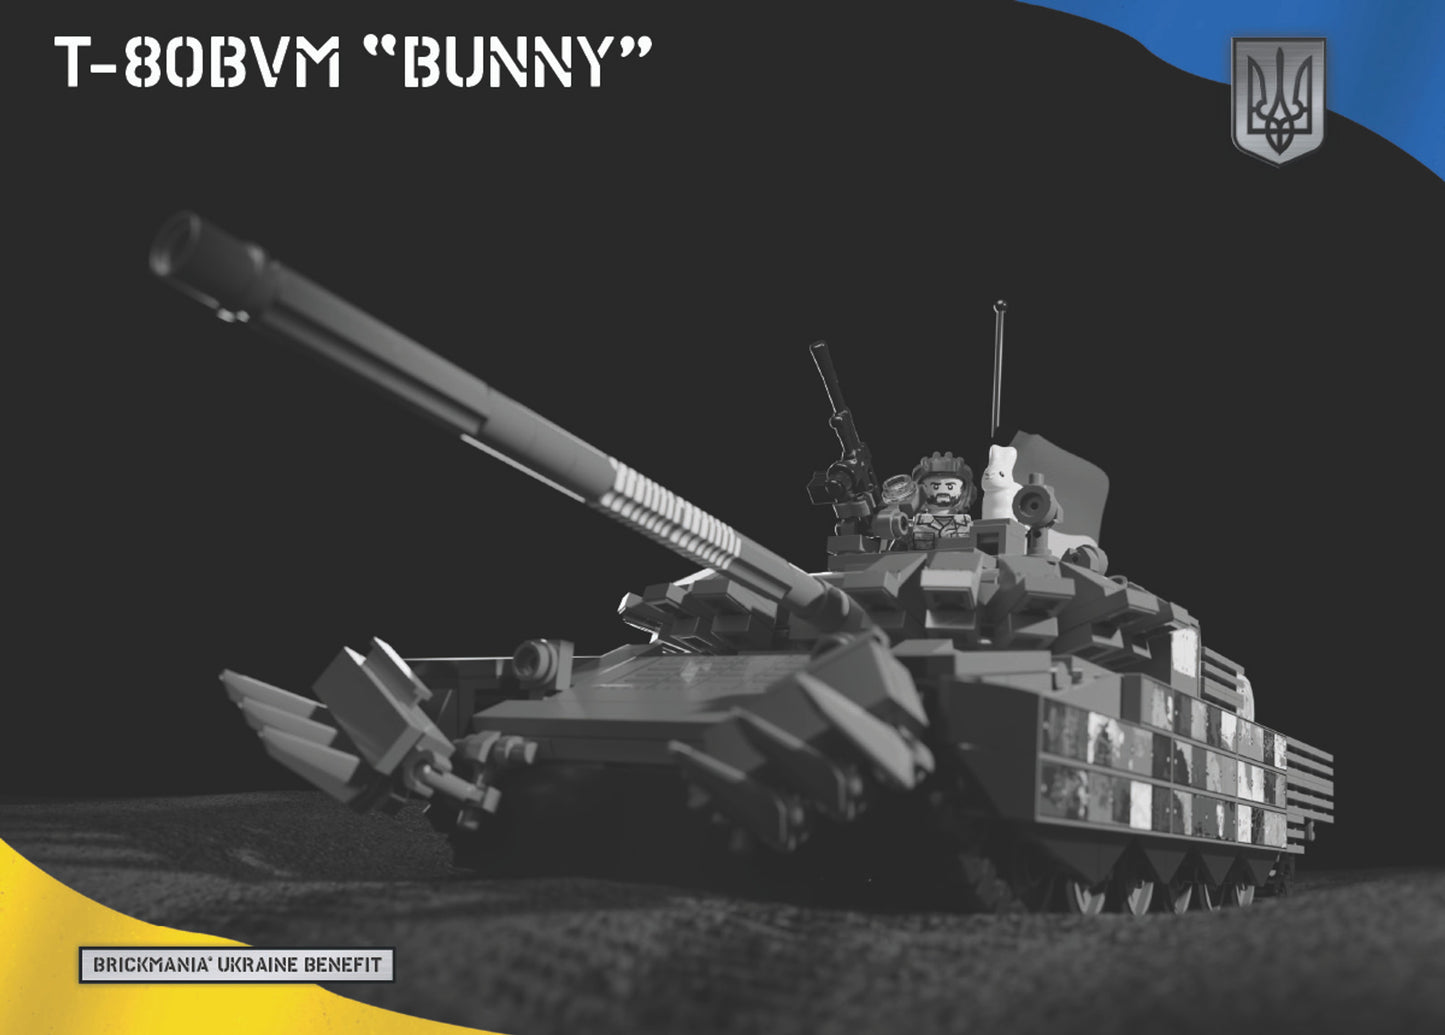 T-80BVM "Bunny" – Captured Russian MBT